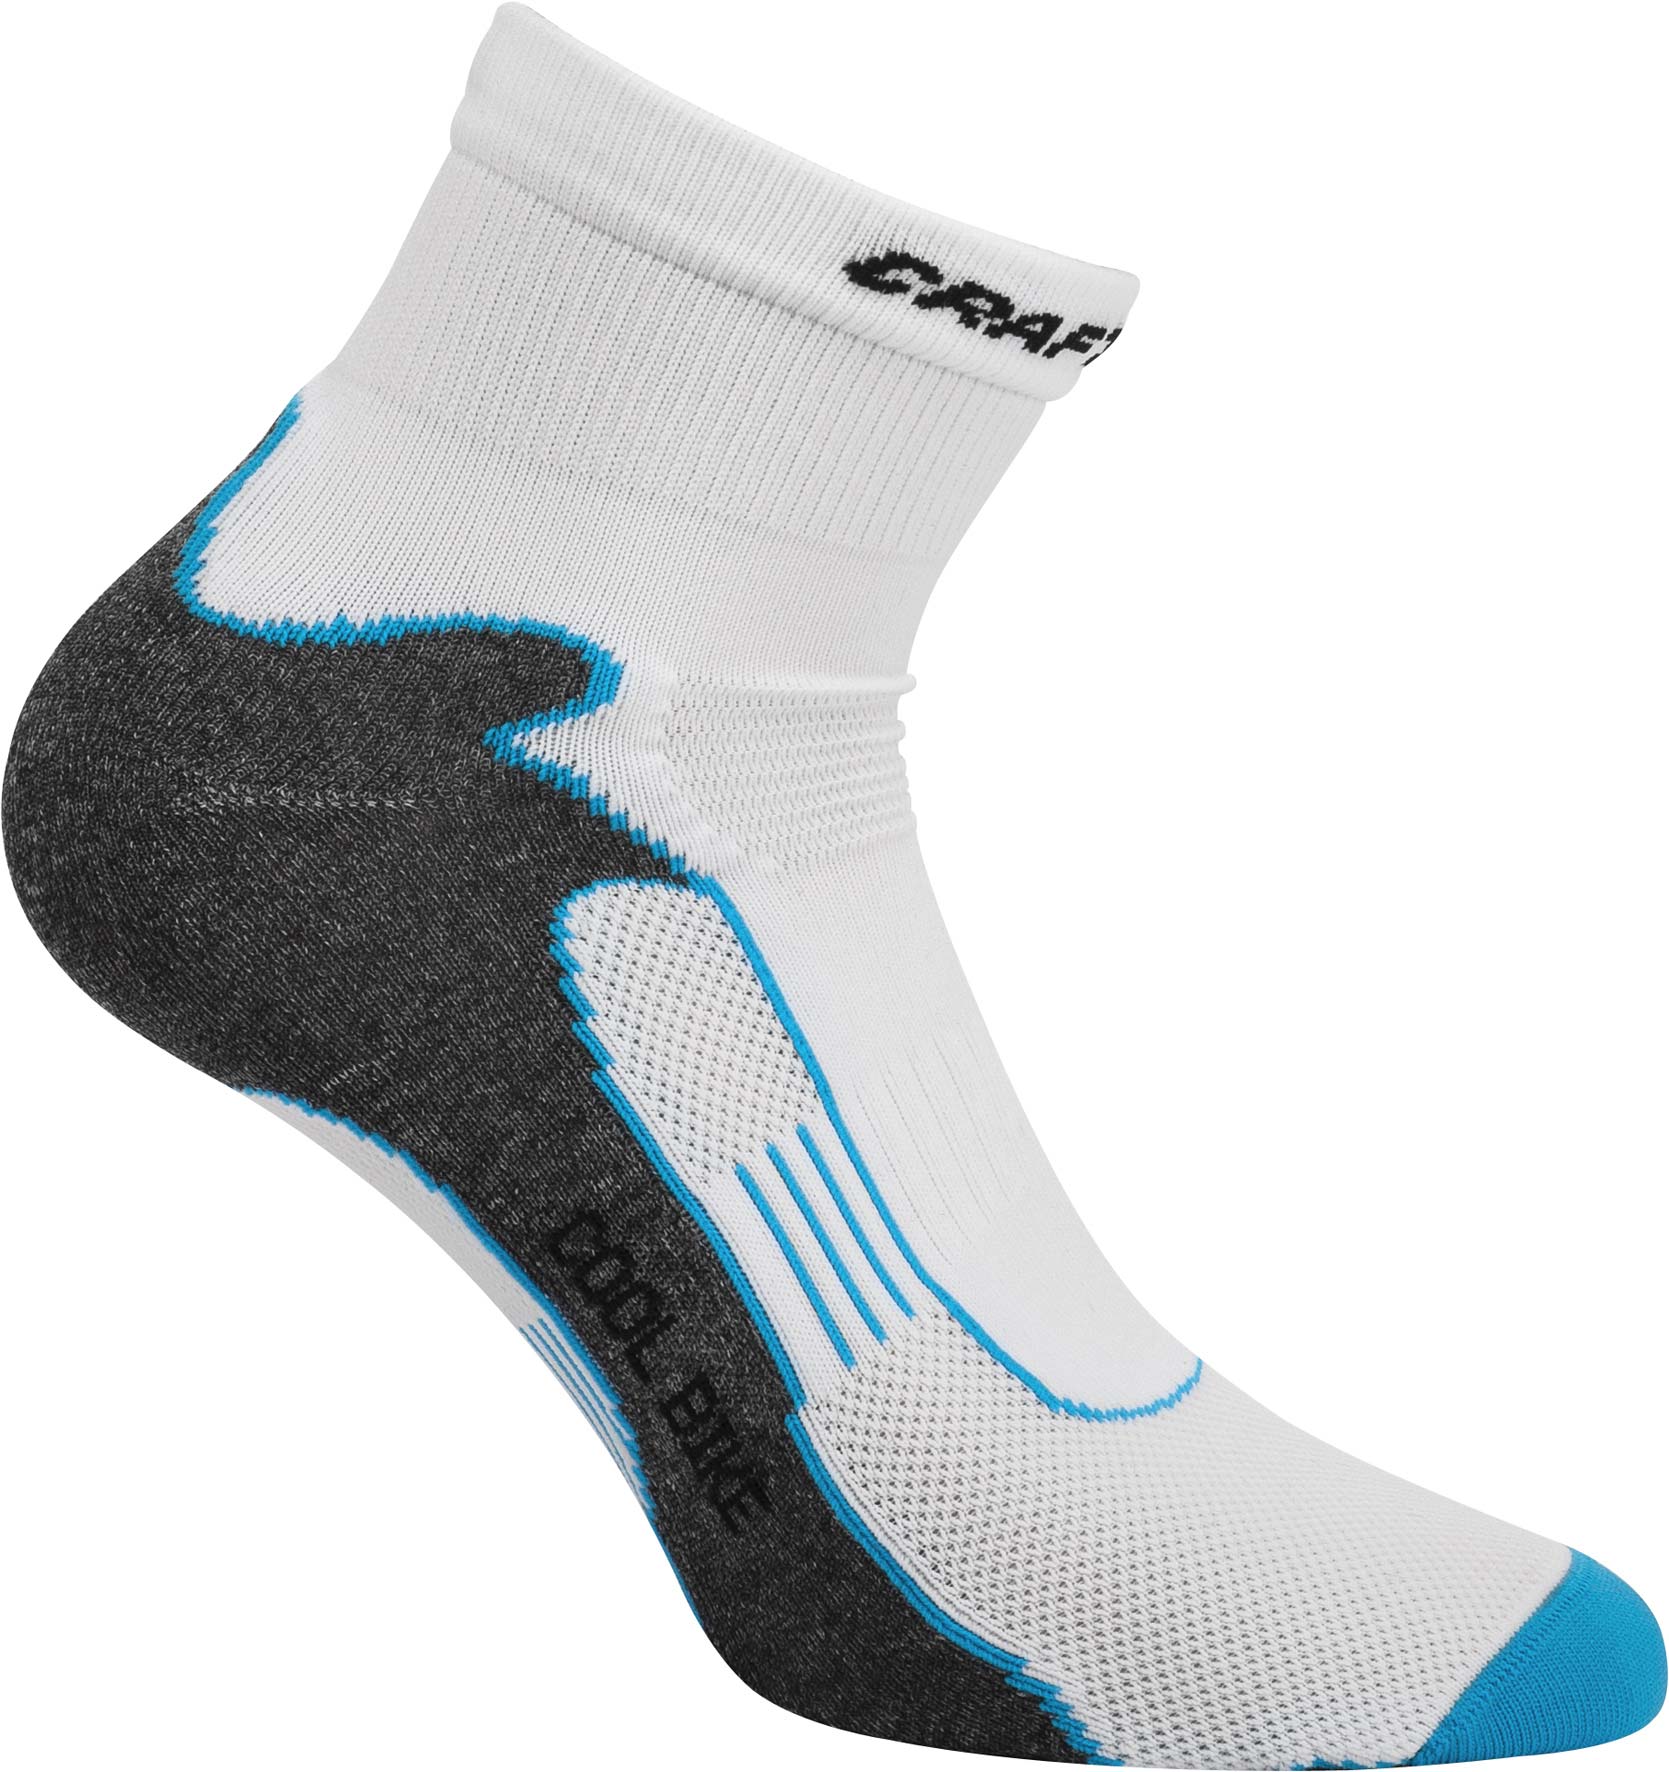 Cycling socks